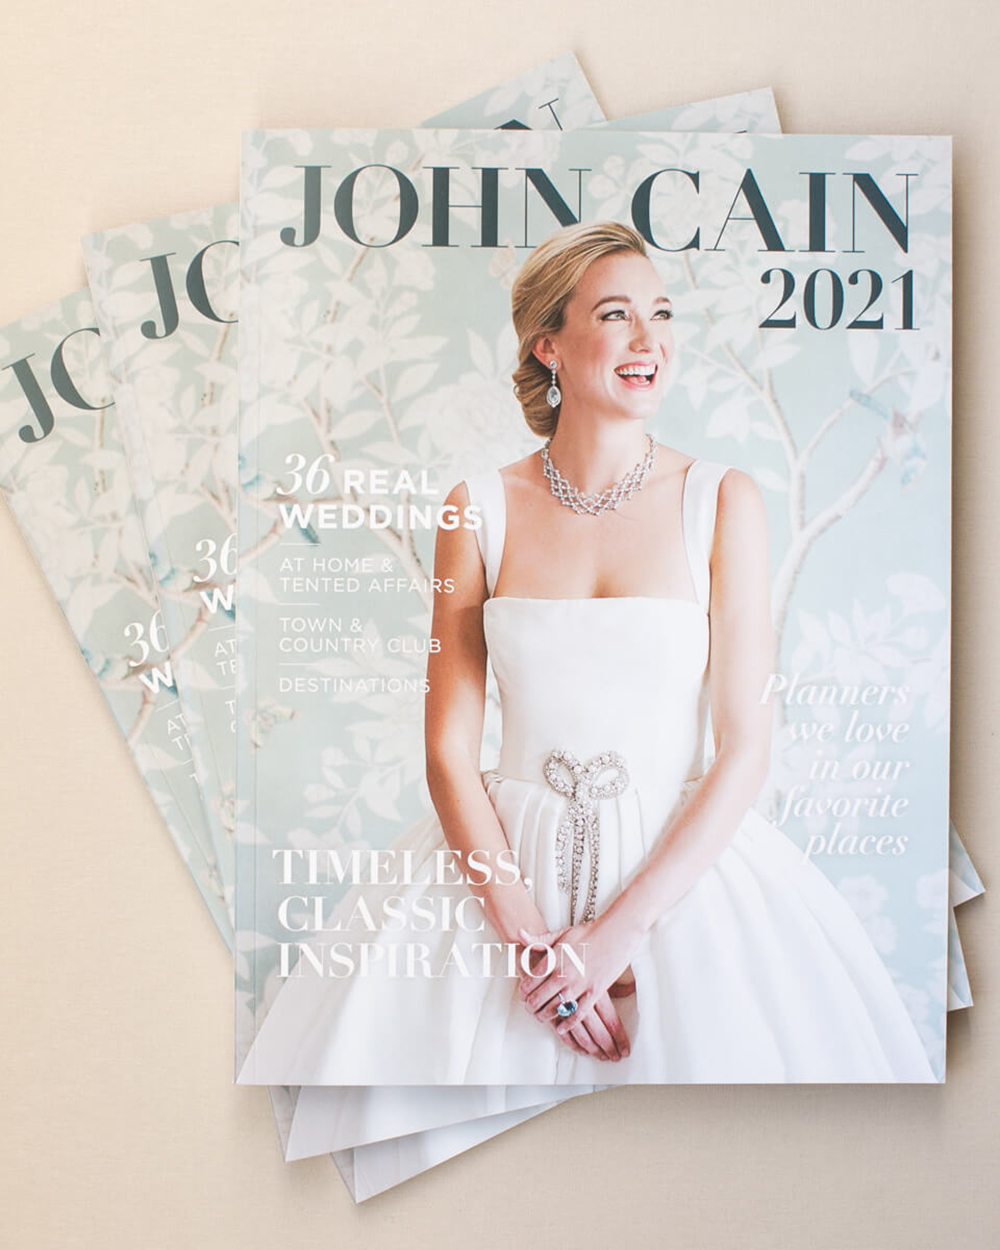 John Cain Photography Magazine Launch!